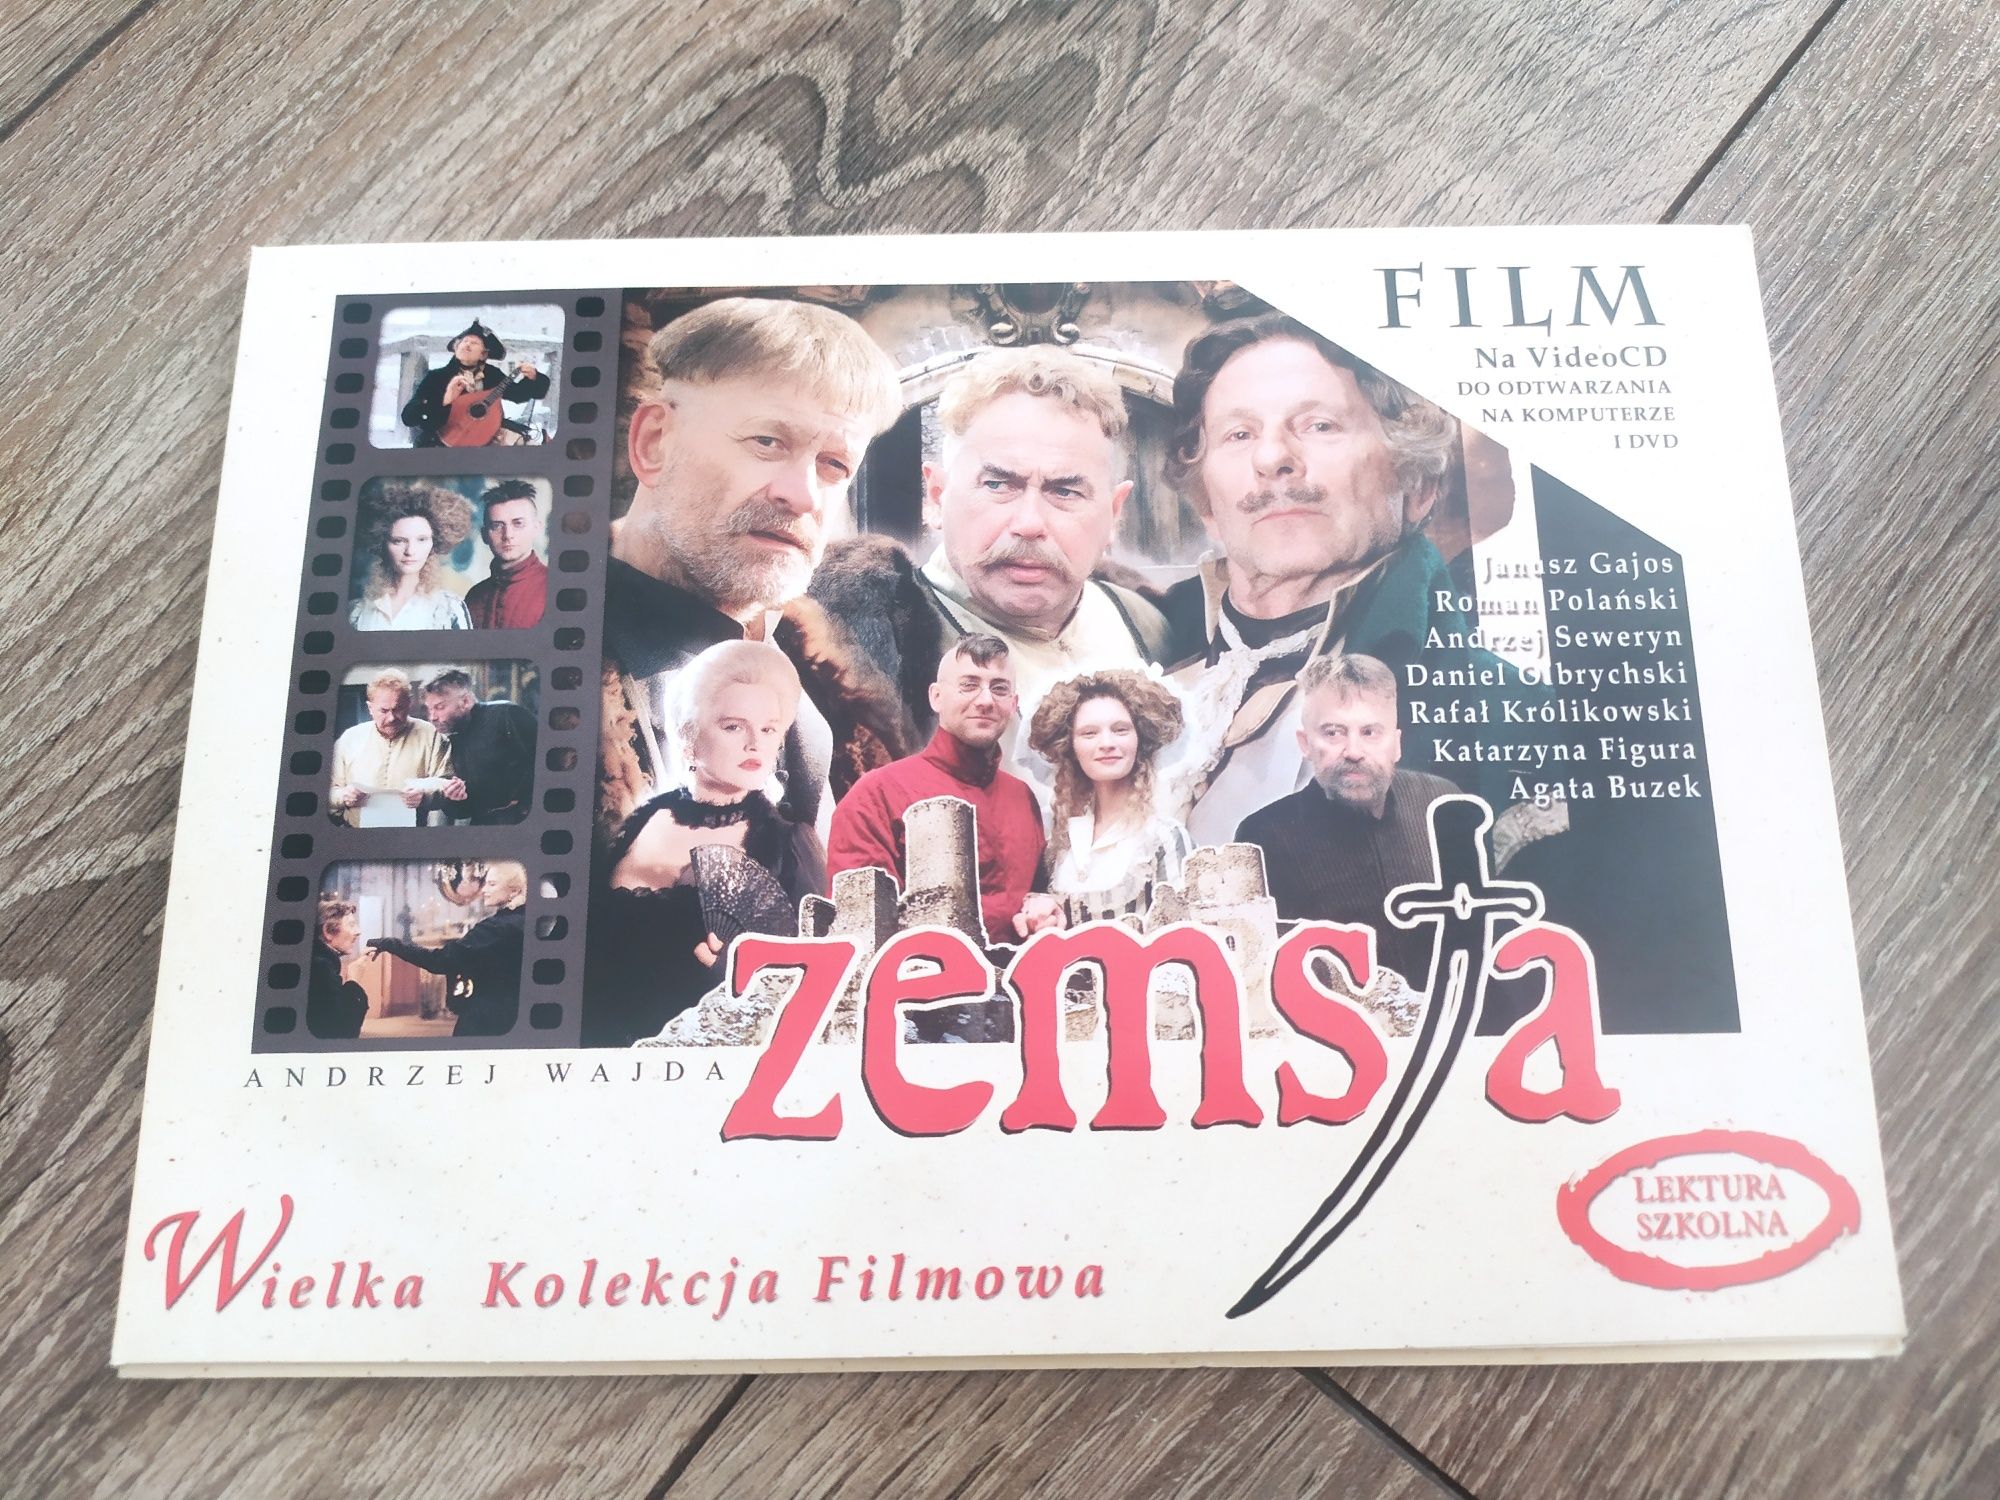 Film Video CD "Zemsta"